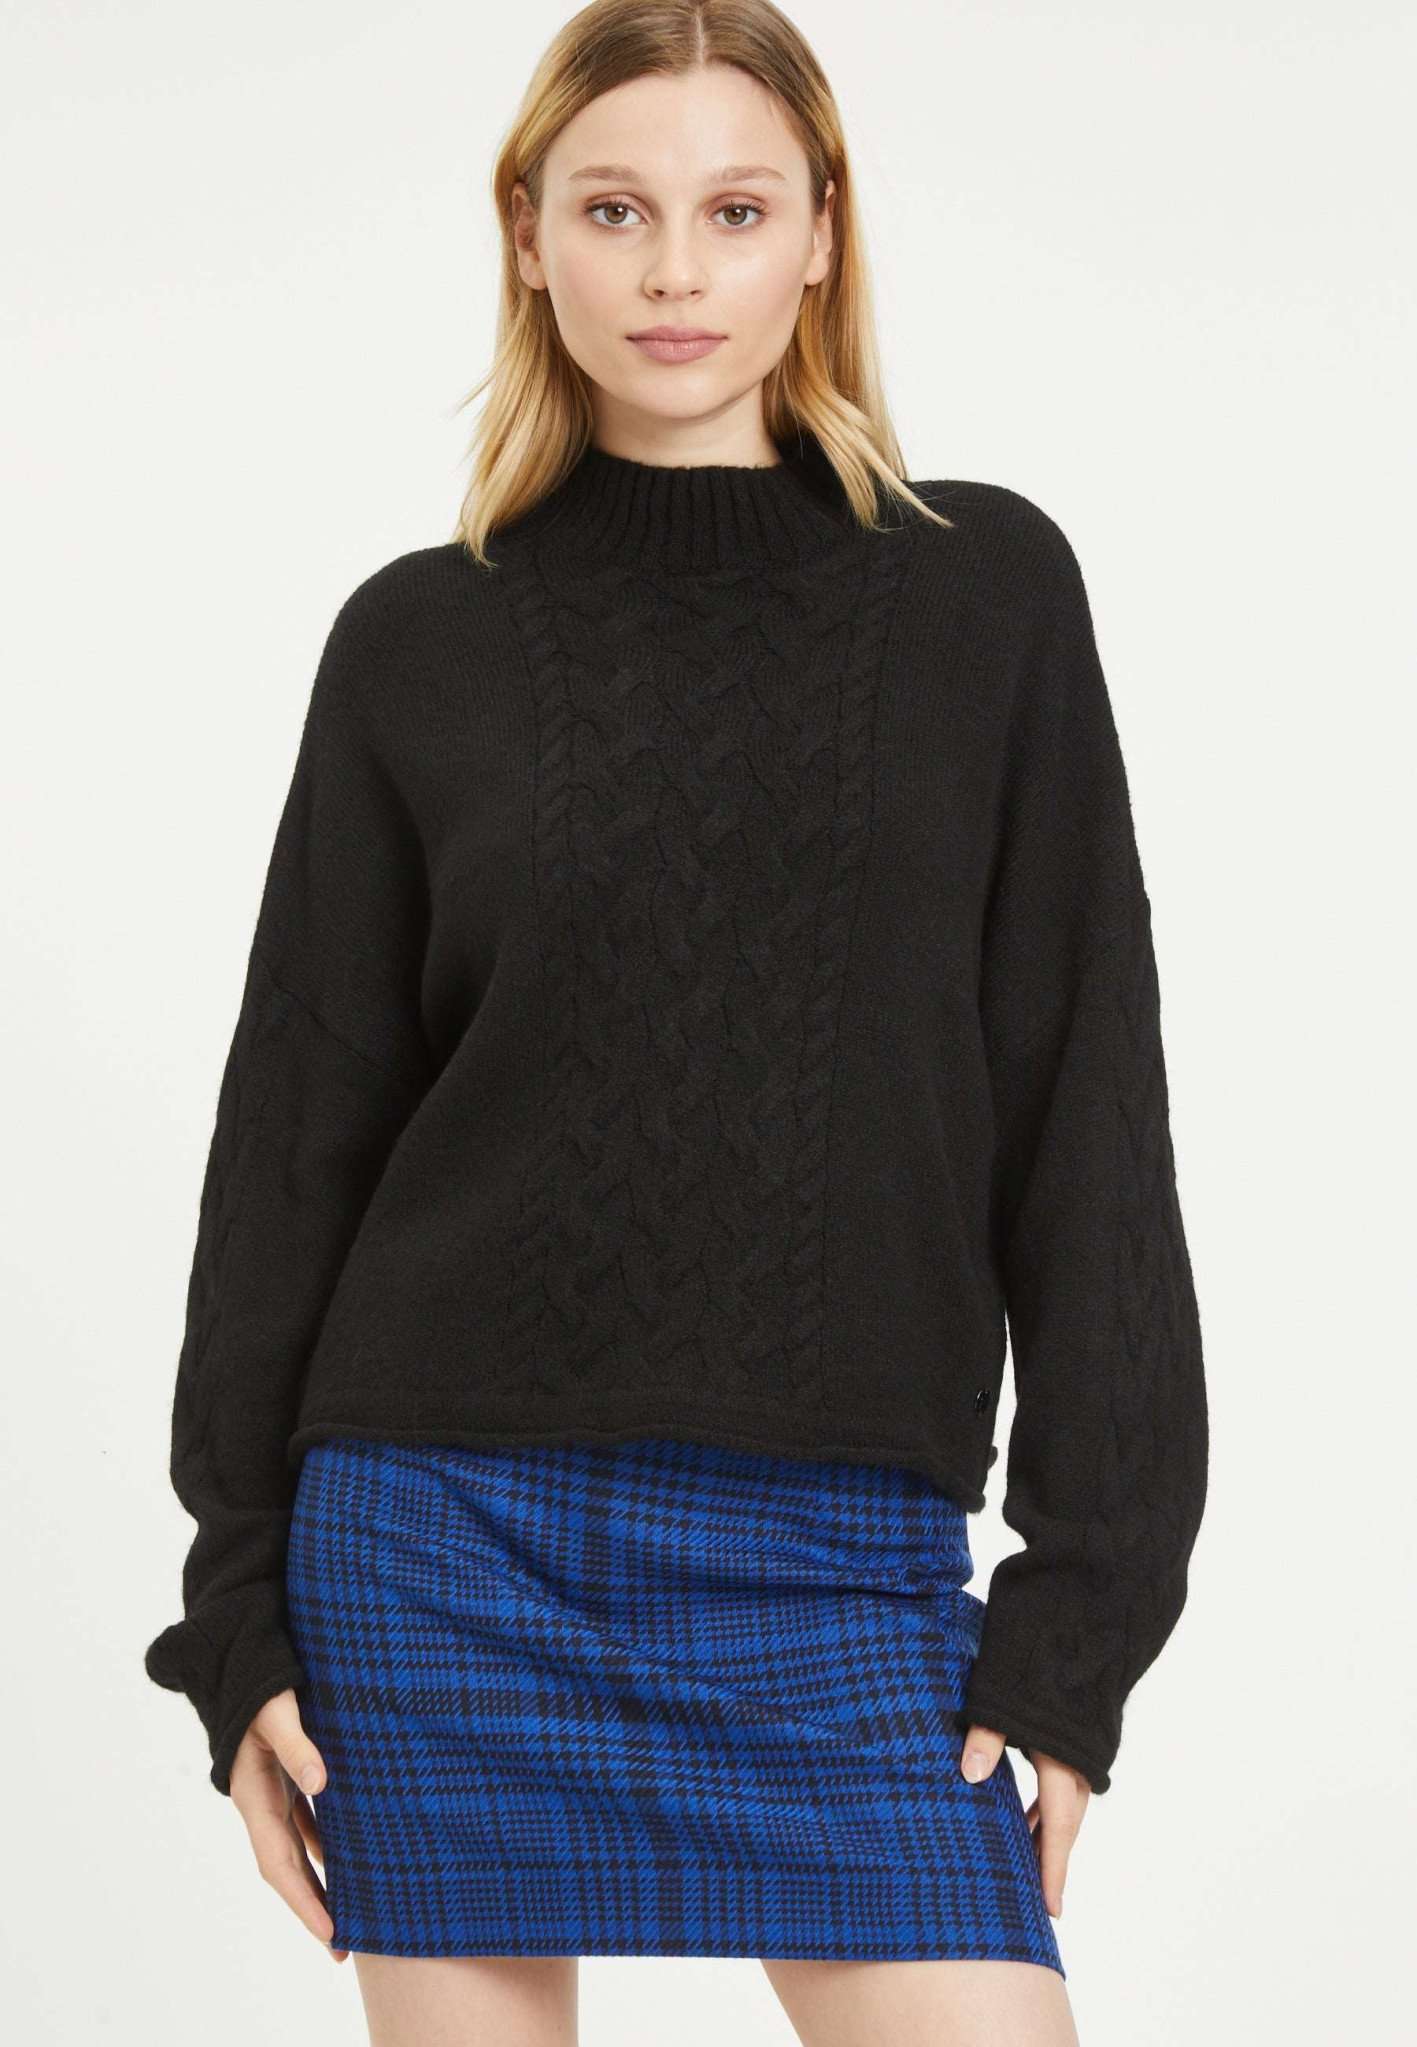 Balje Cable Knit Sweater in Black Beauty Pullover Tamaris   